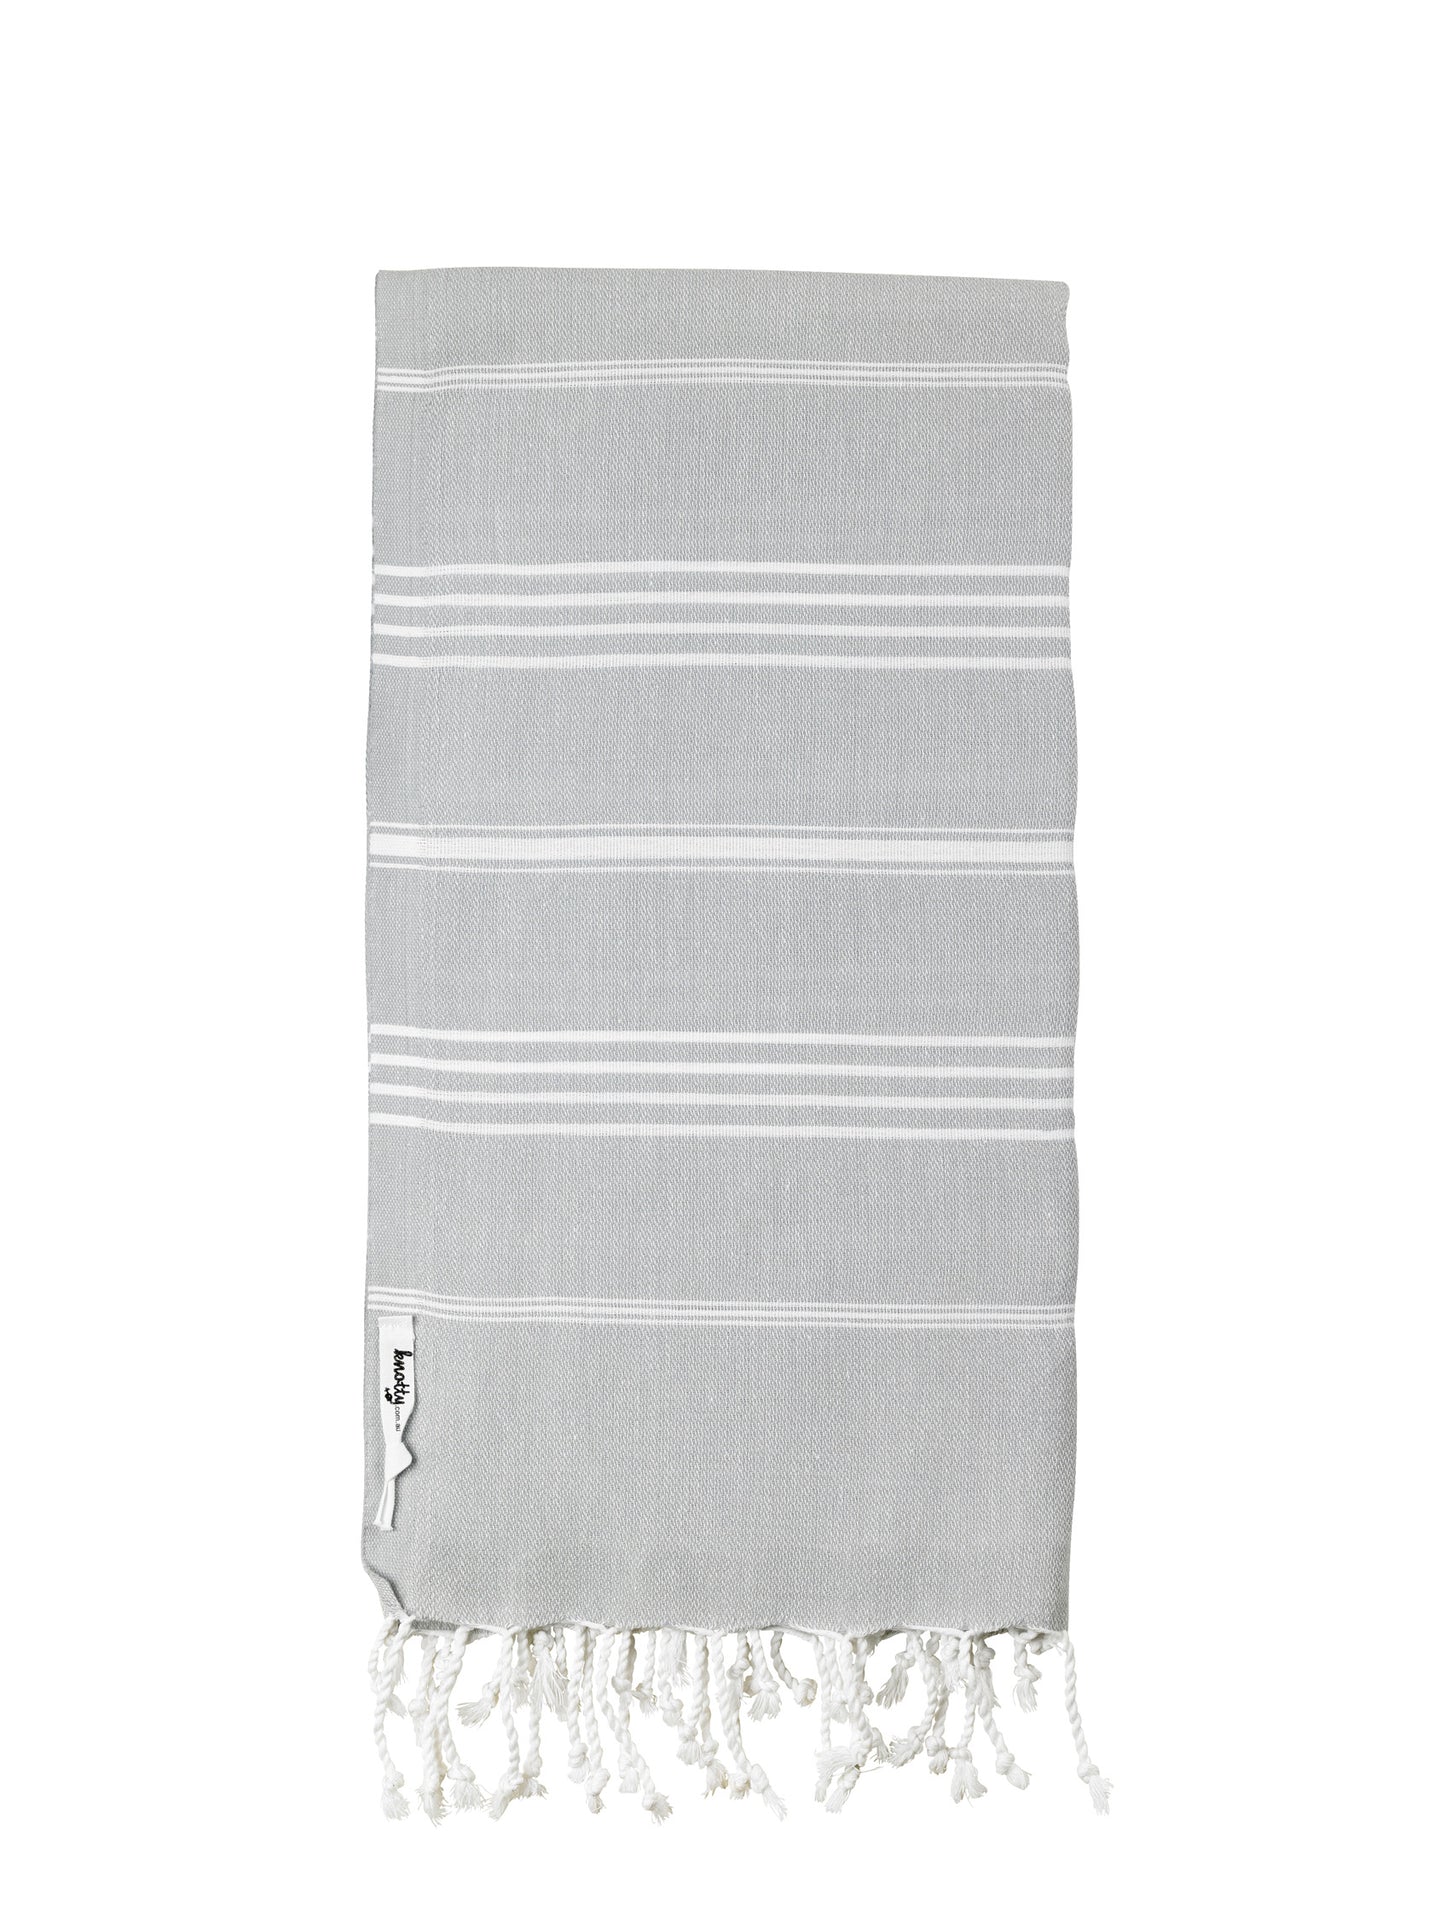 Knotty Original Turkish Towel - Silver